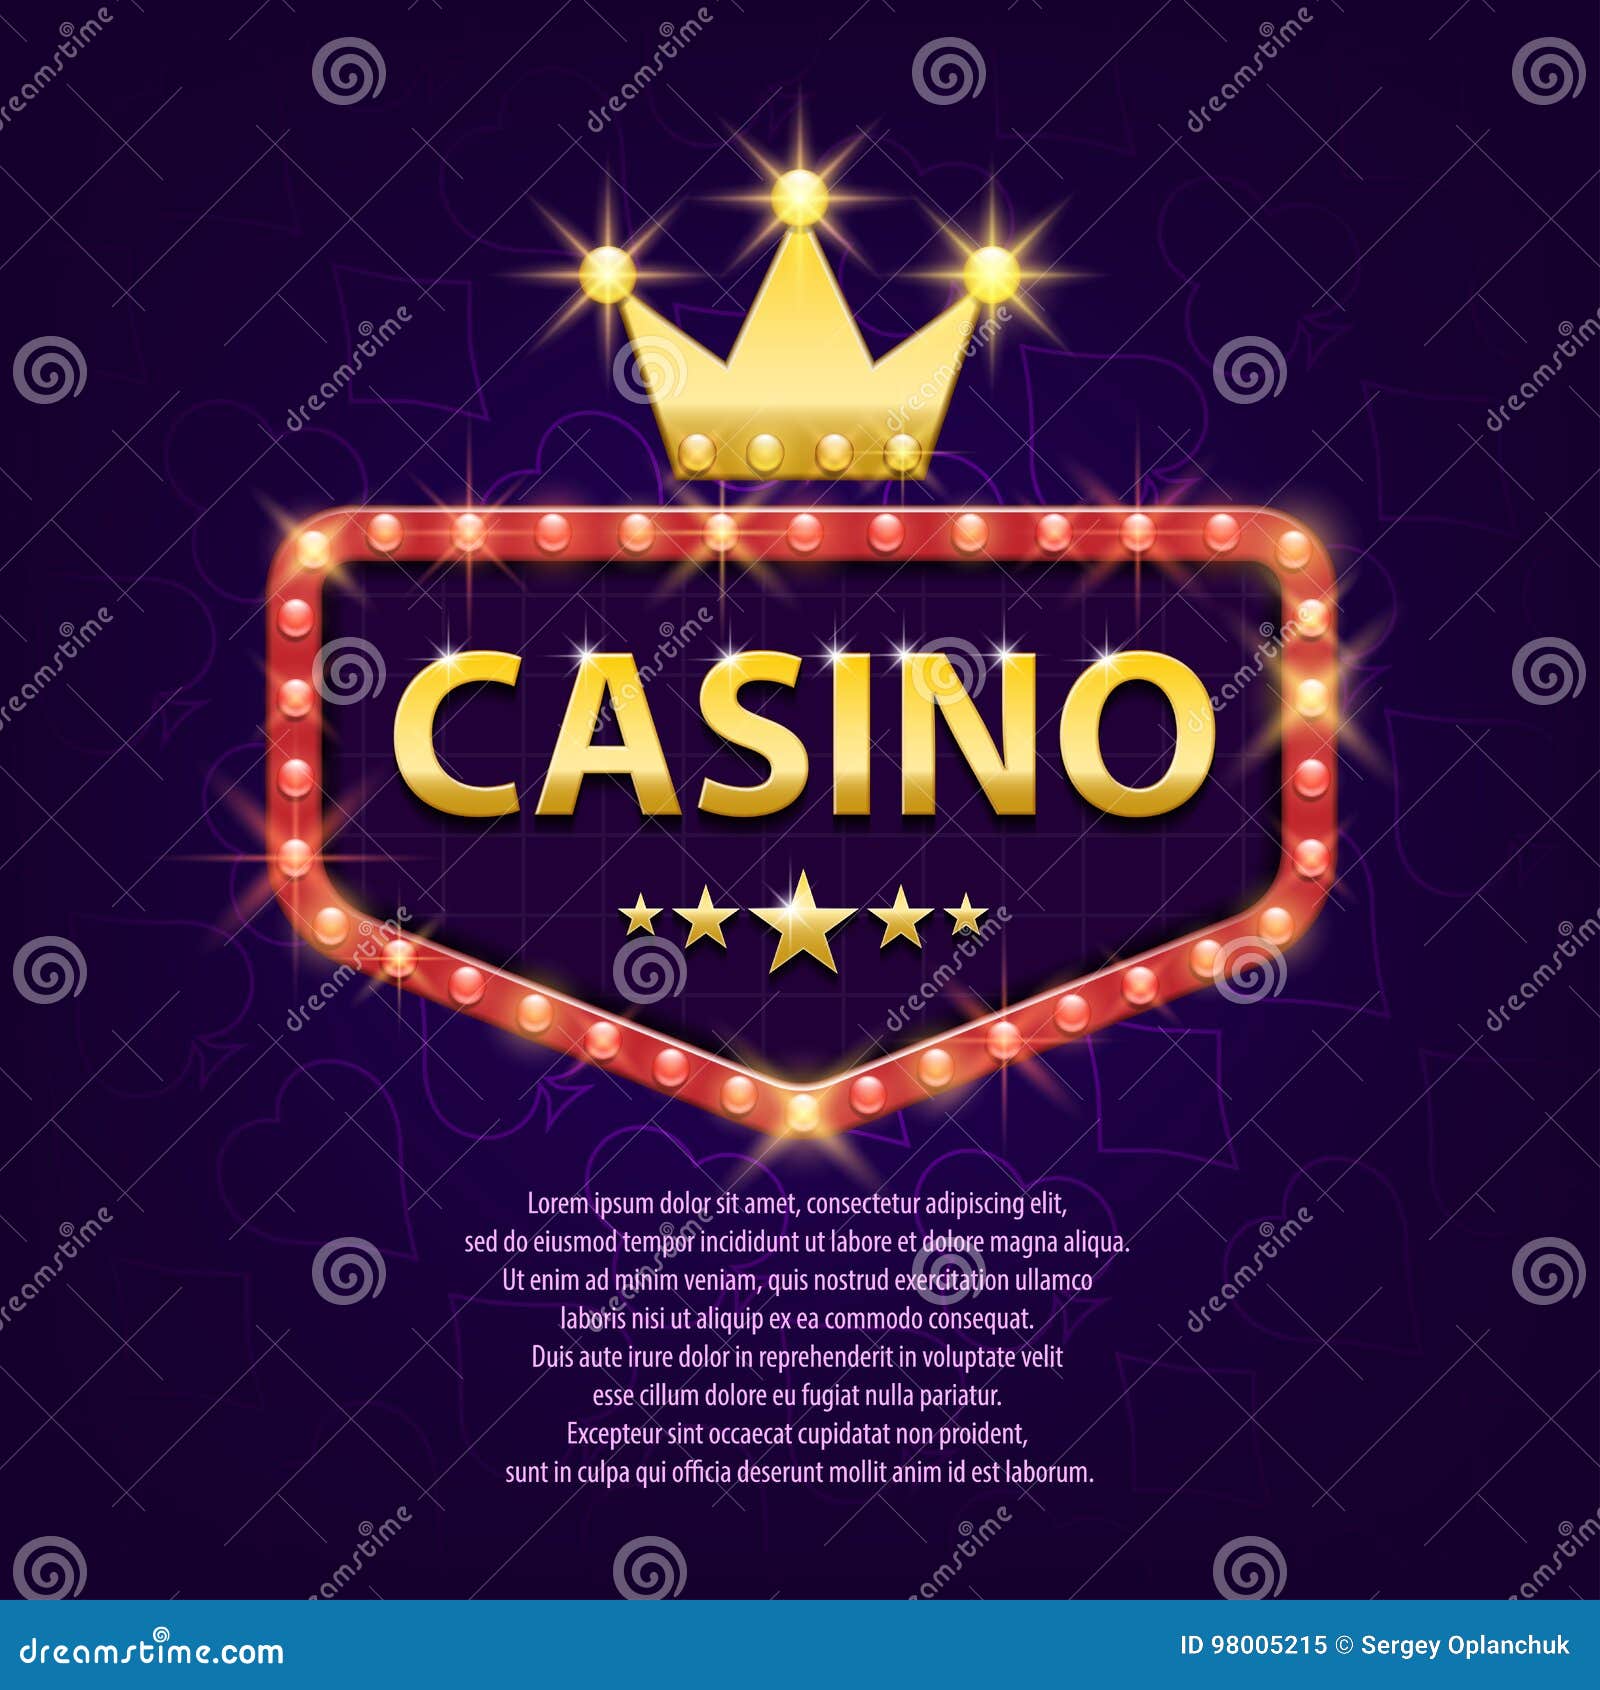 Parimatch online casino